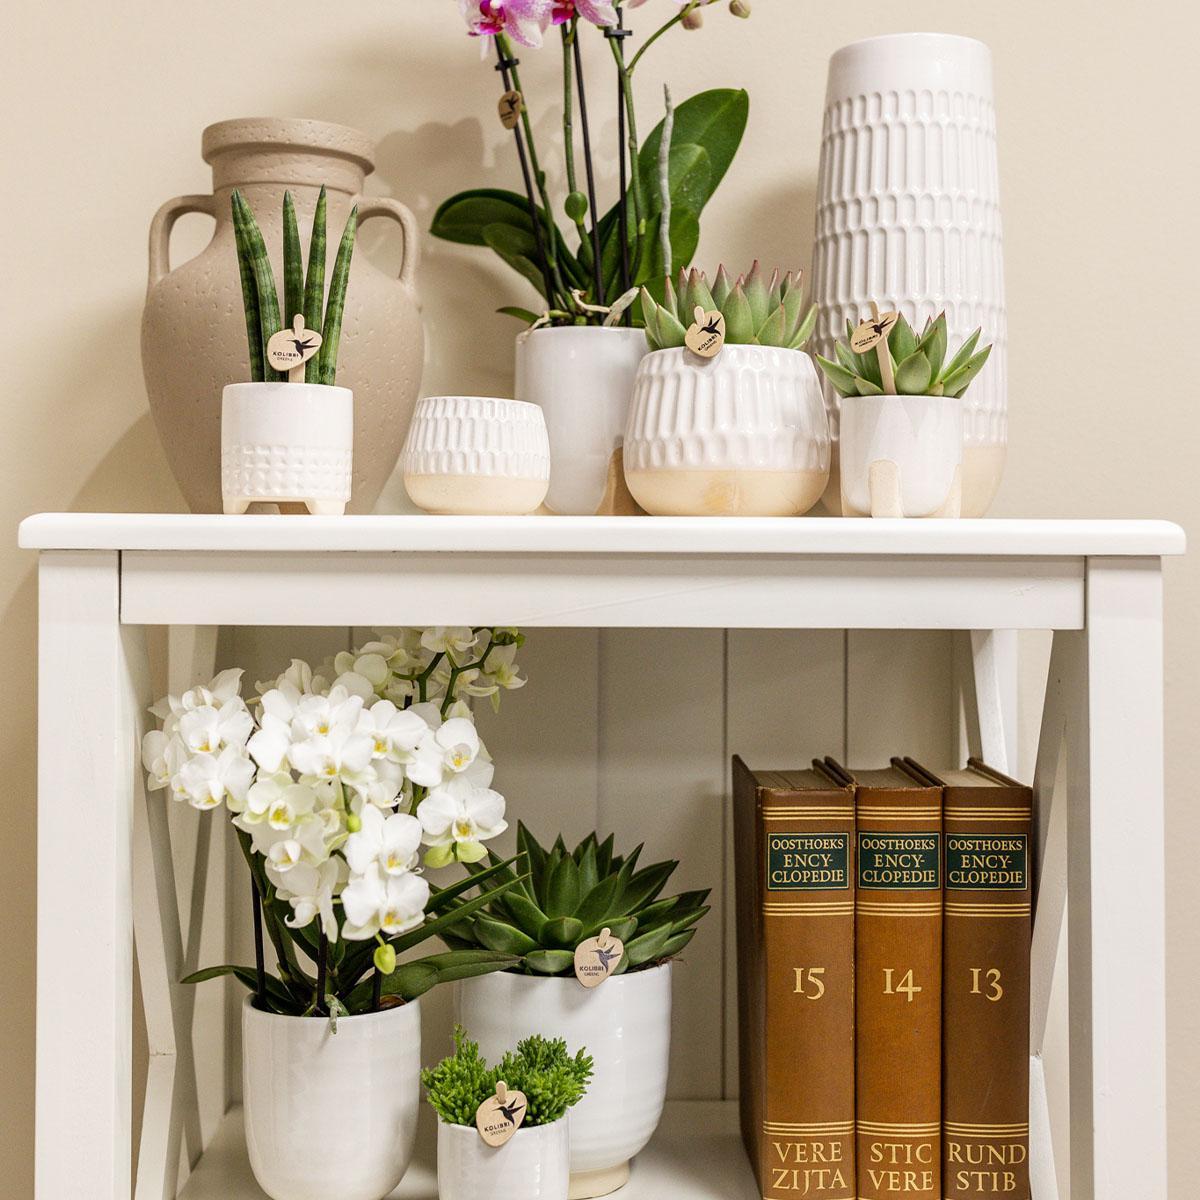 Hummingbird Home | Glazed flower pot - White ceramic decorative pot with gloss - pot size Ø12cm